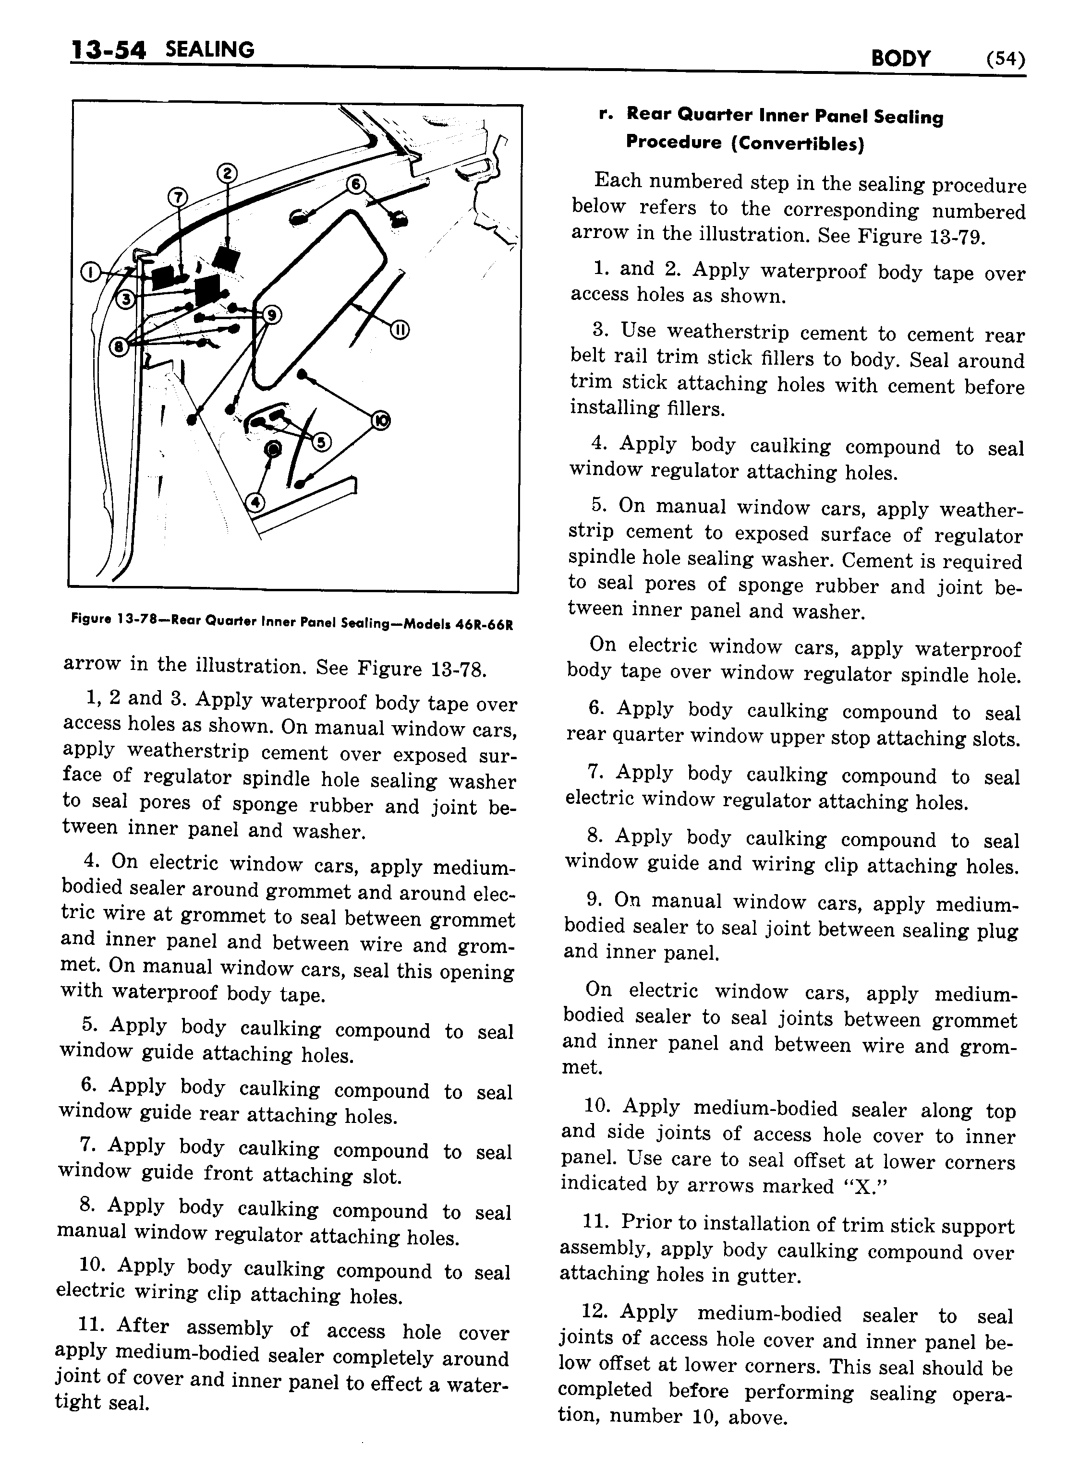 n_1957 Buick Body Service Manual-056-056.jpg